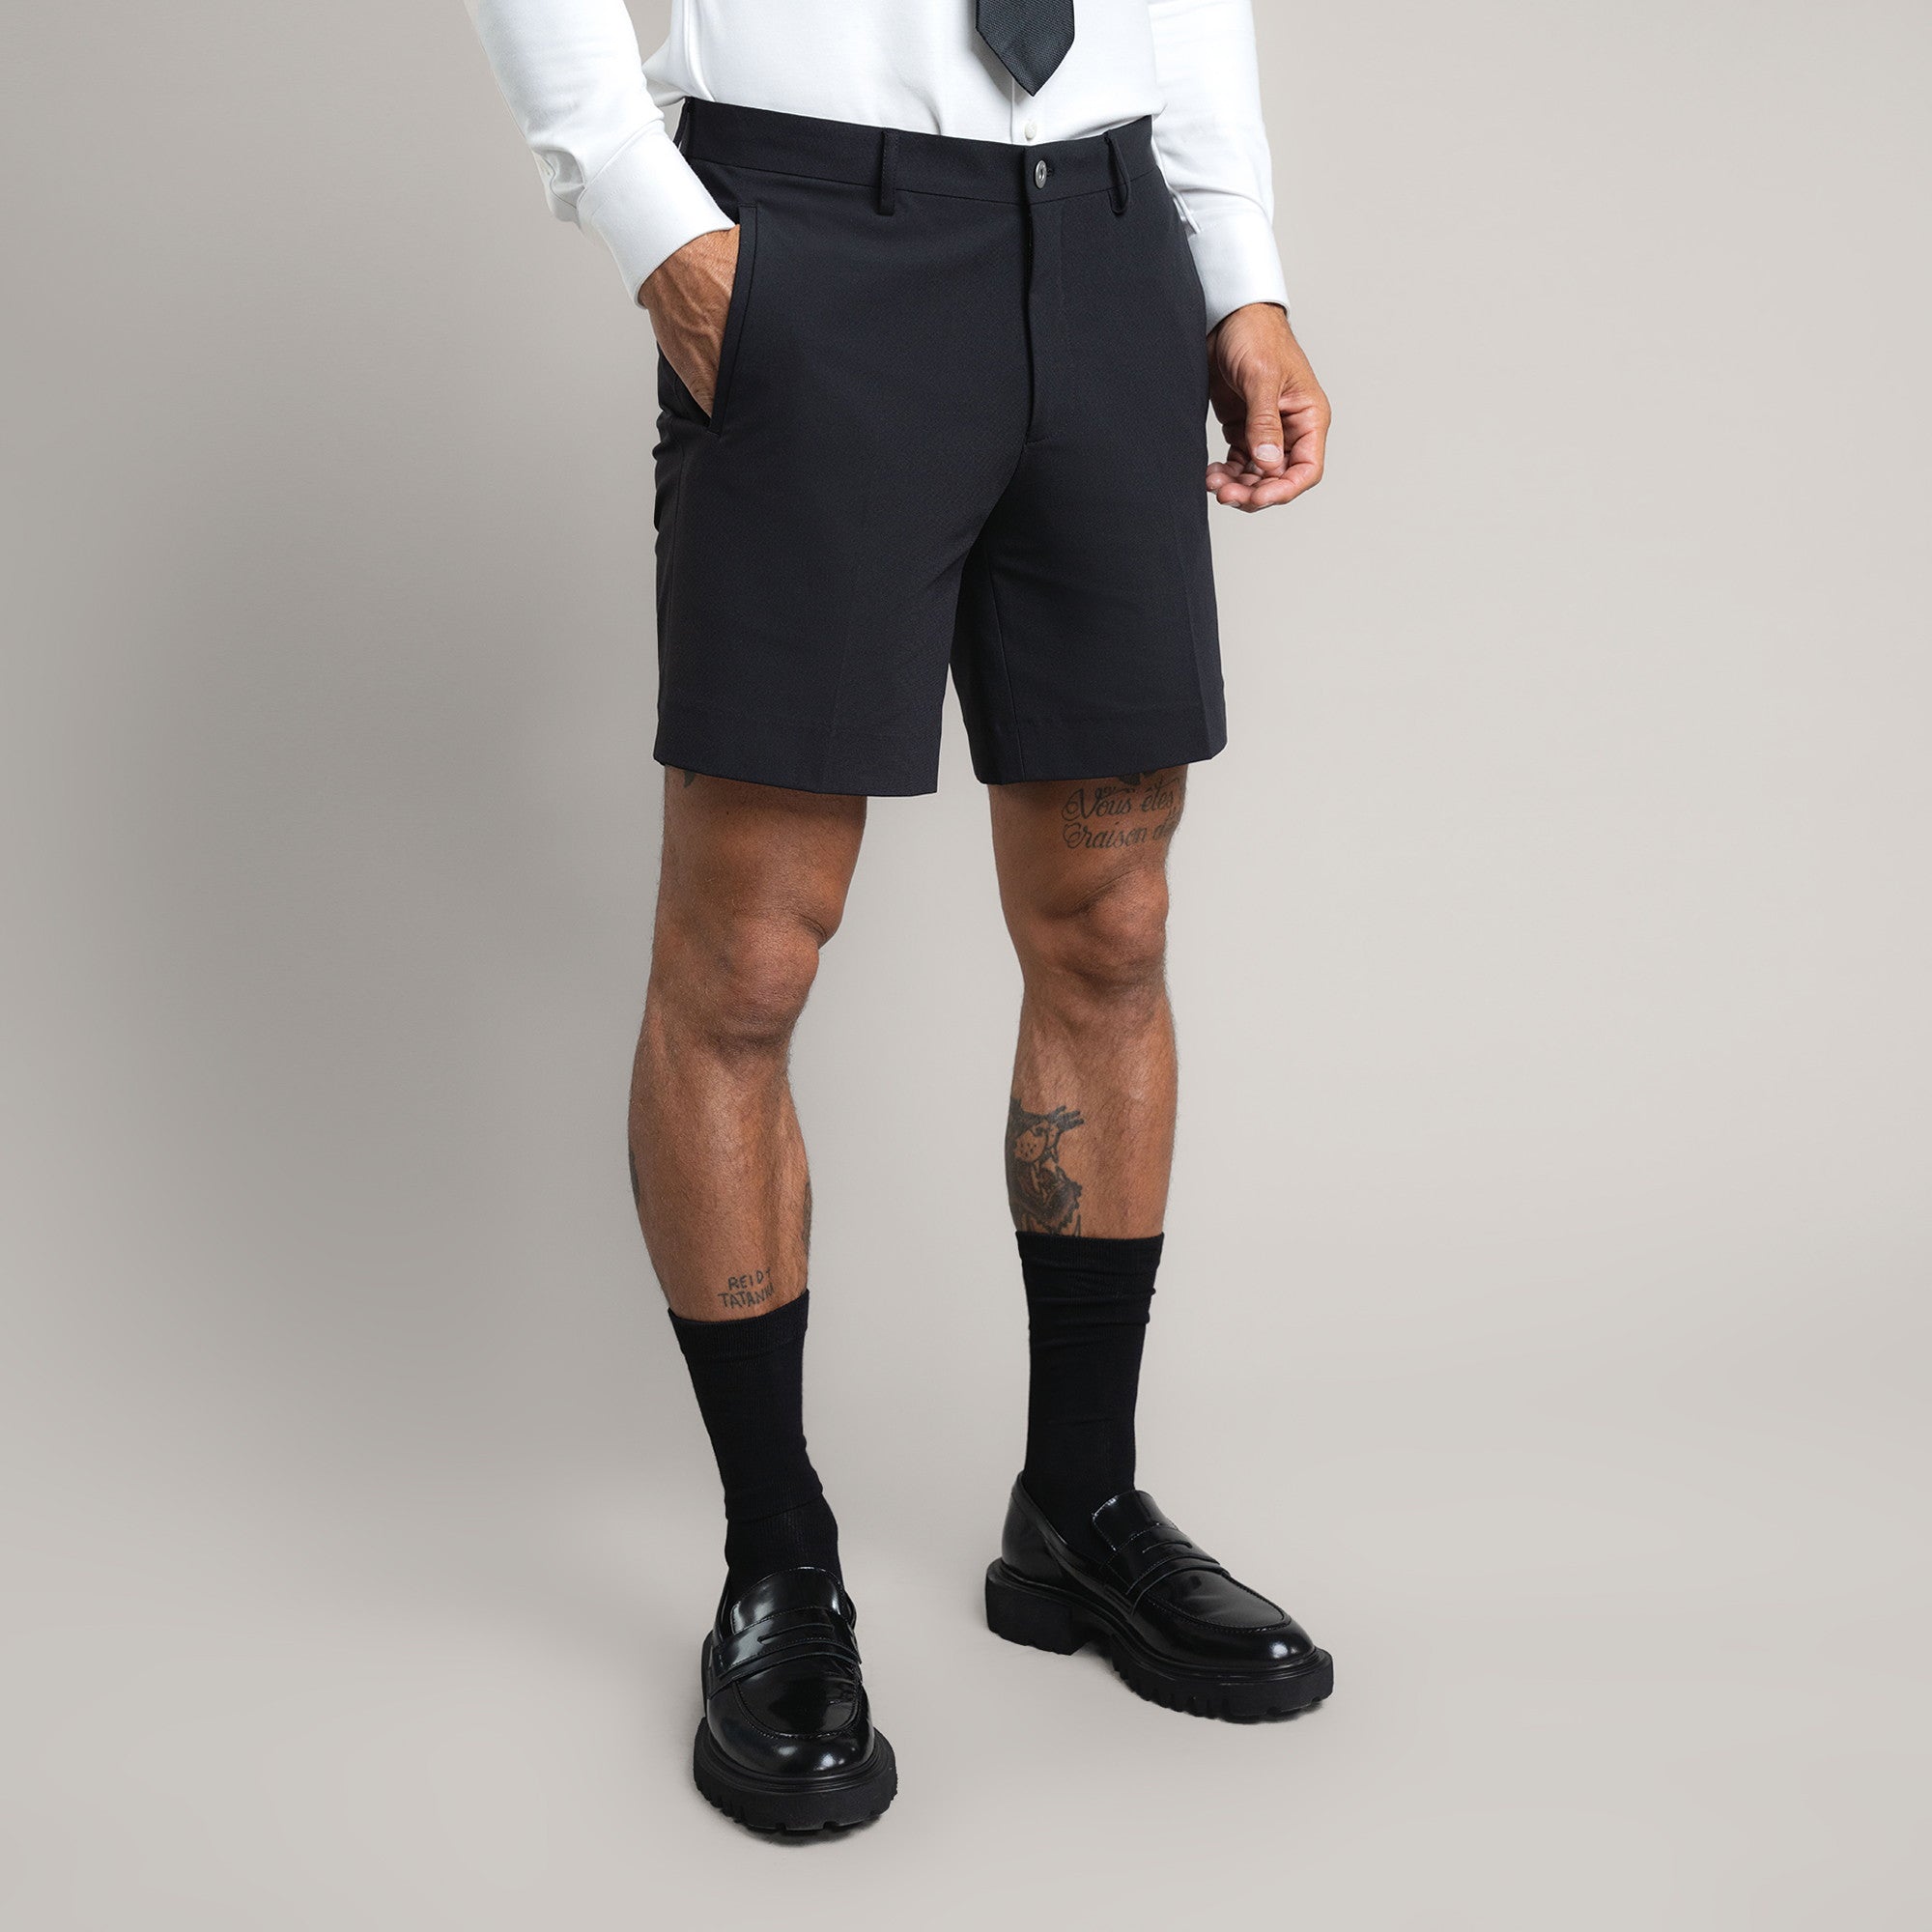 SENE - Men's Custom Shorts